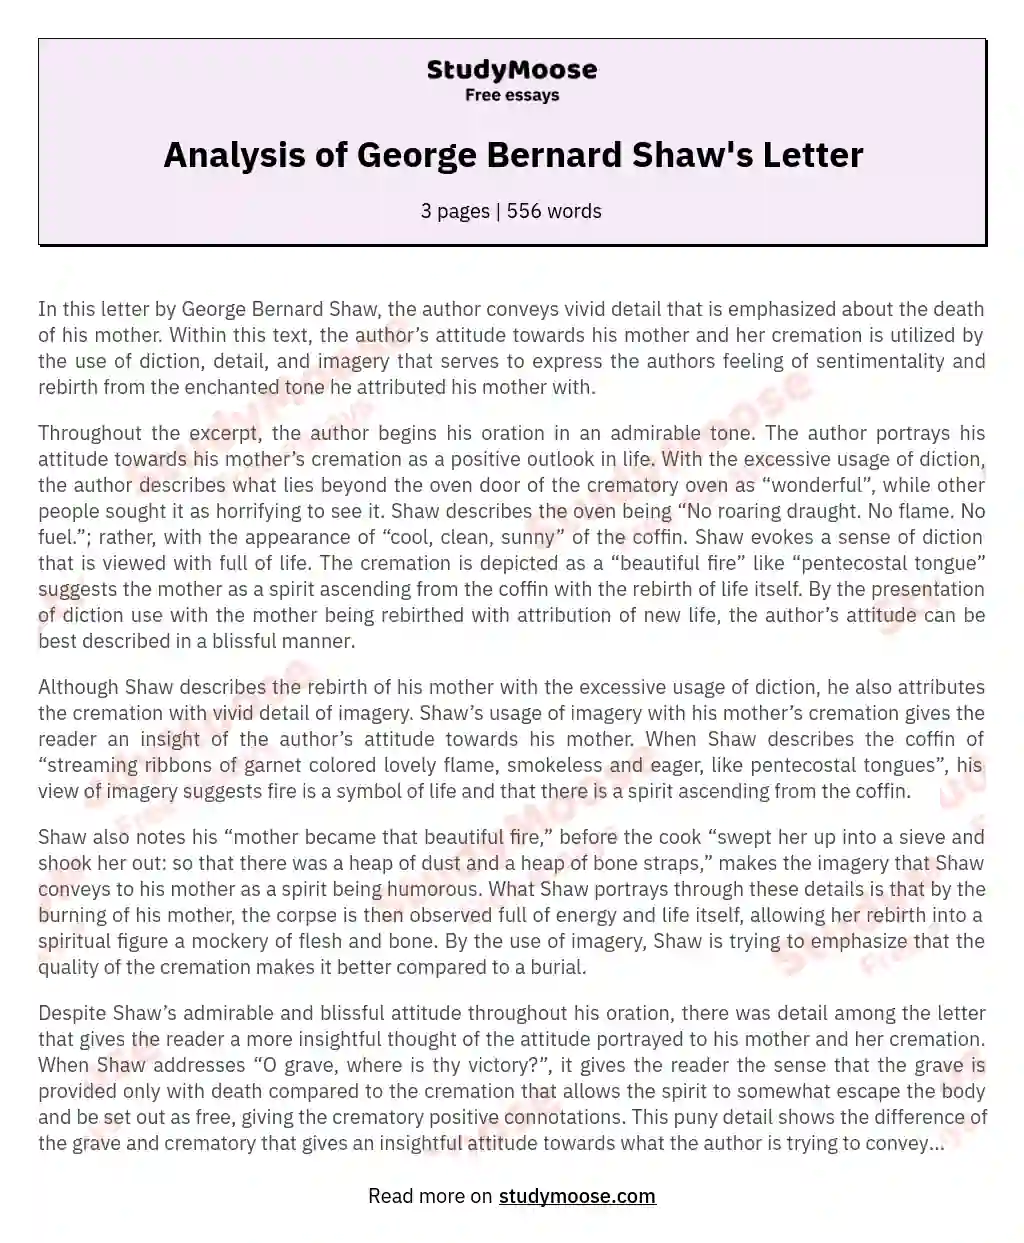 Analysis of George Bernard Shaw's Letter essay